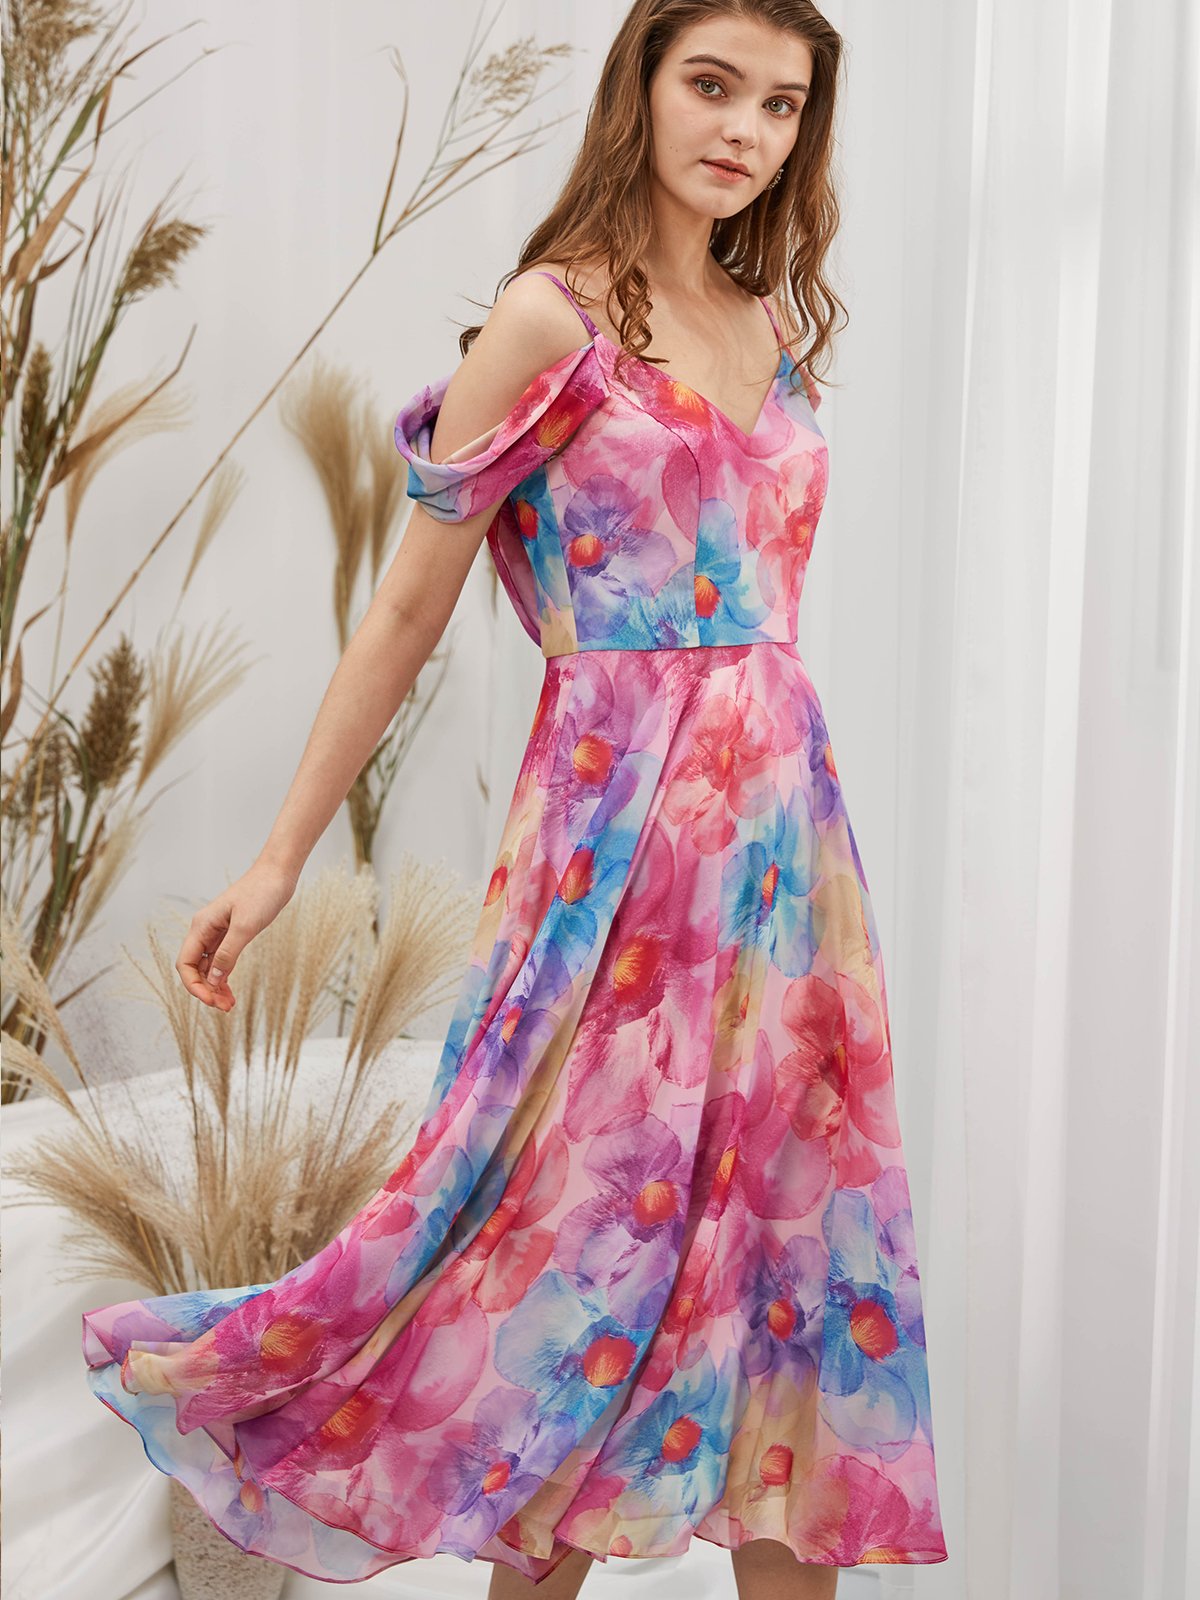 Straps V neck Off the Shoulder Chiffon Print Floral Fuchsia Tea Length Formal Gown